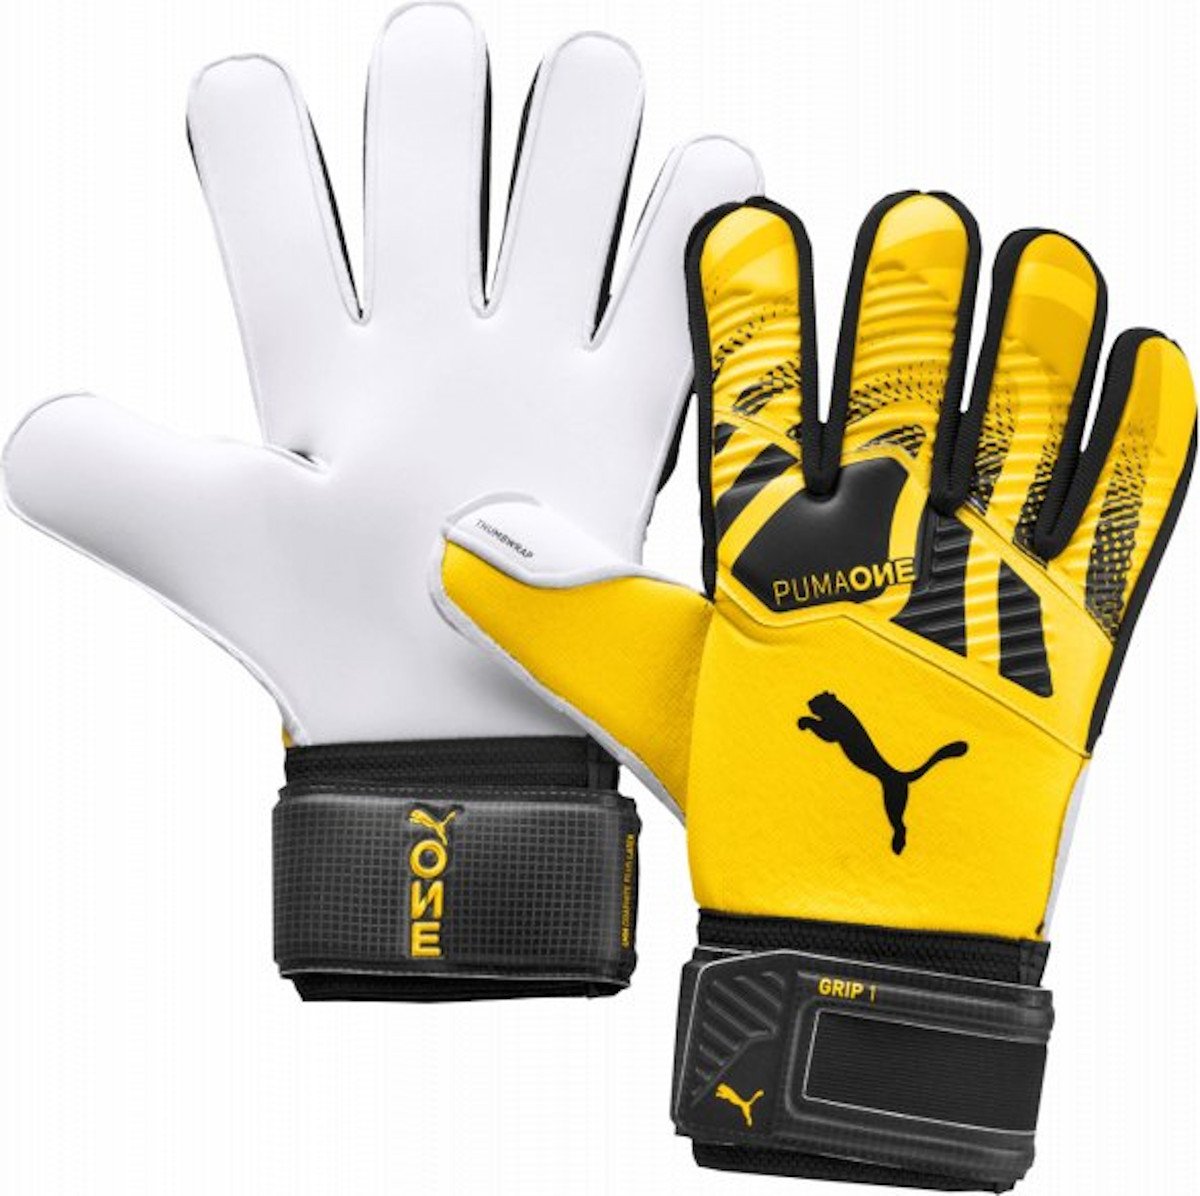 Fotbalové brankářské rukavice Puma One Grip 1